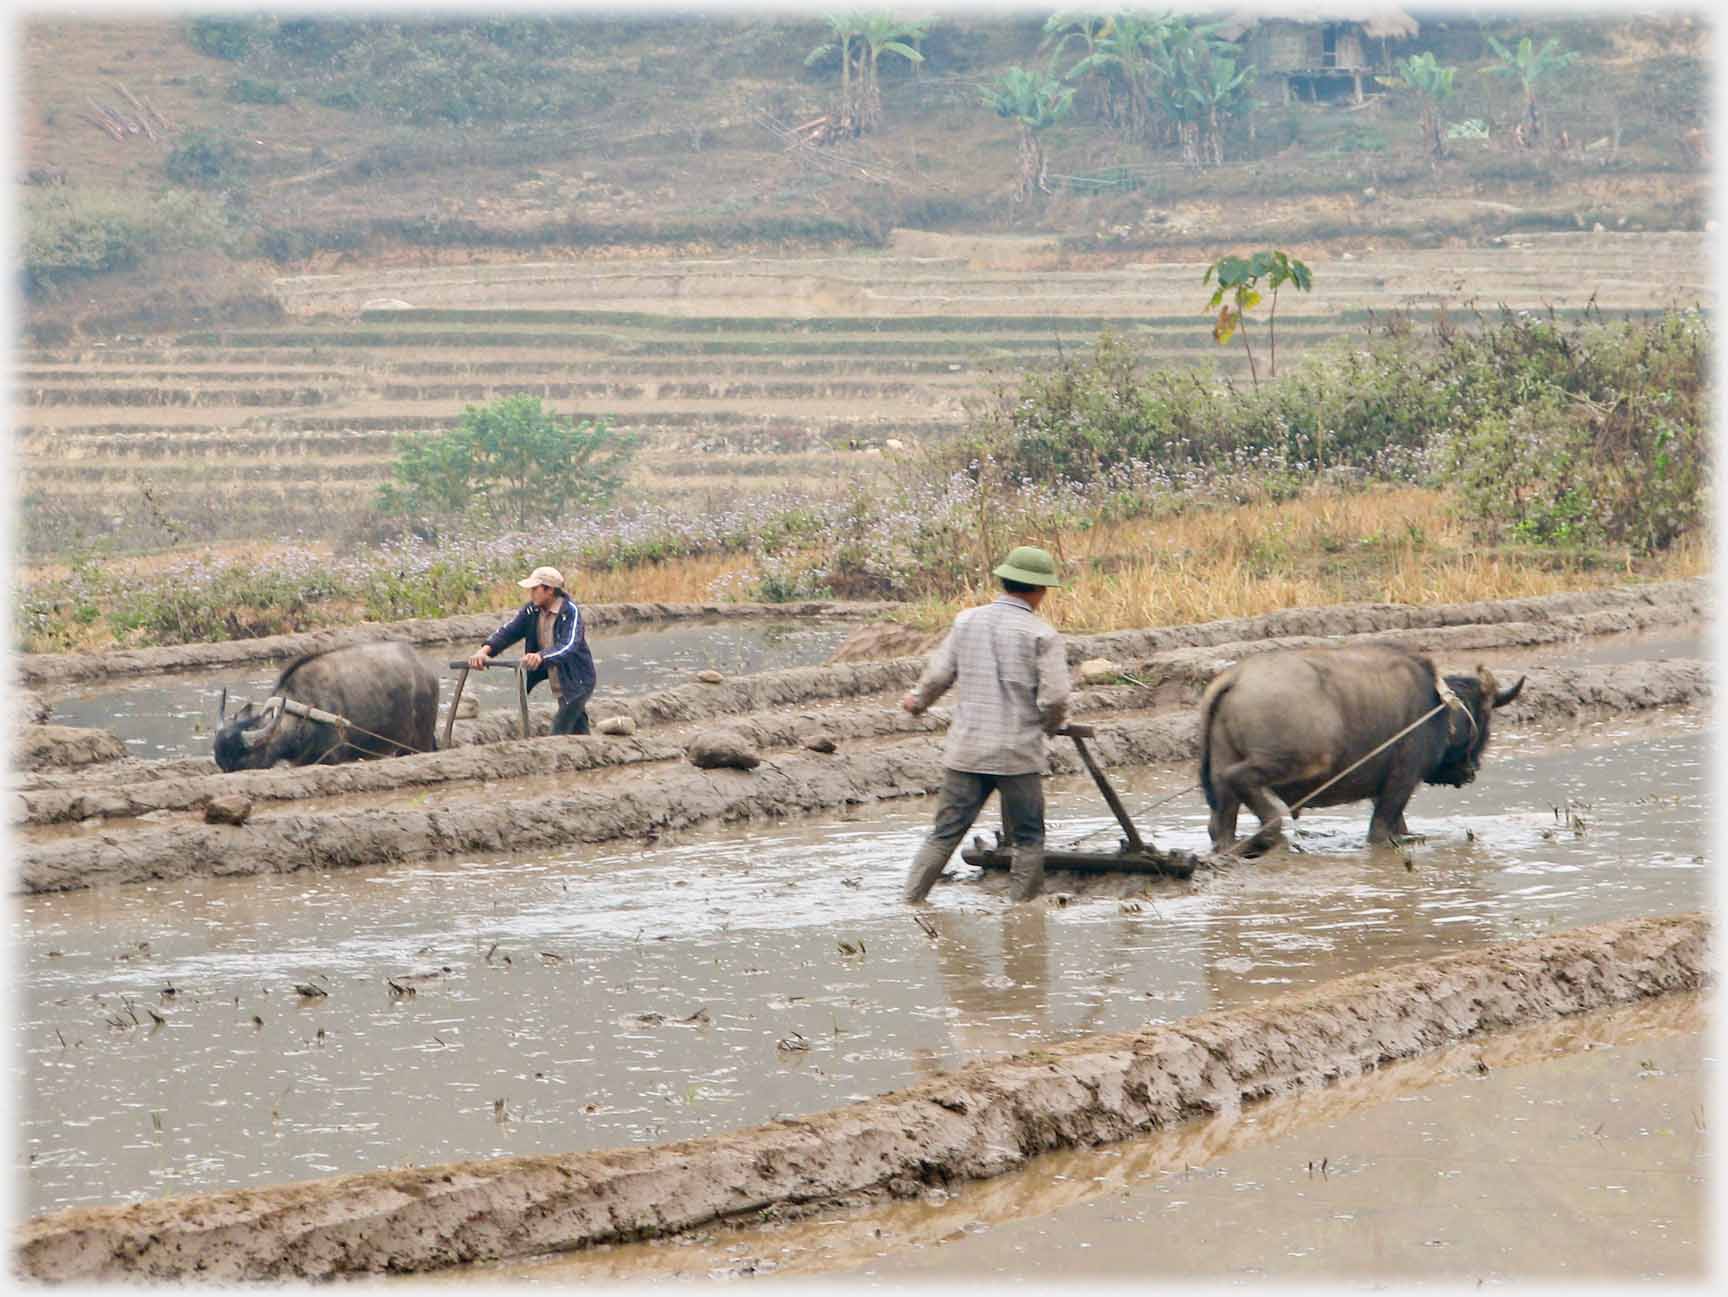 Two ploughmen with buffalo in neighbouring fields.